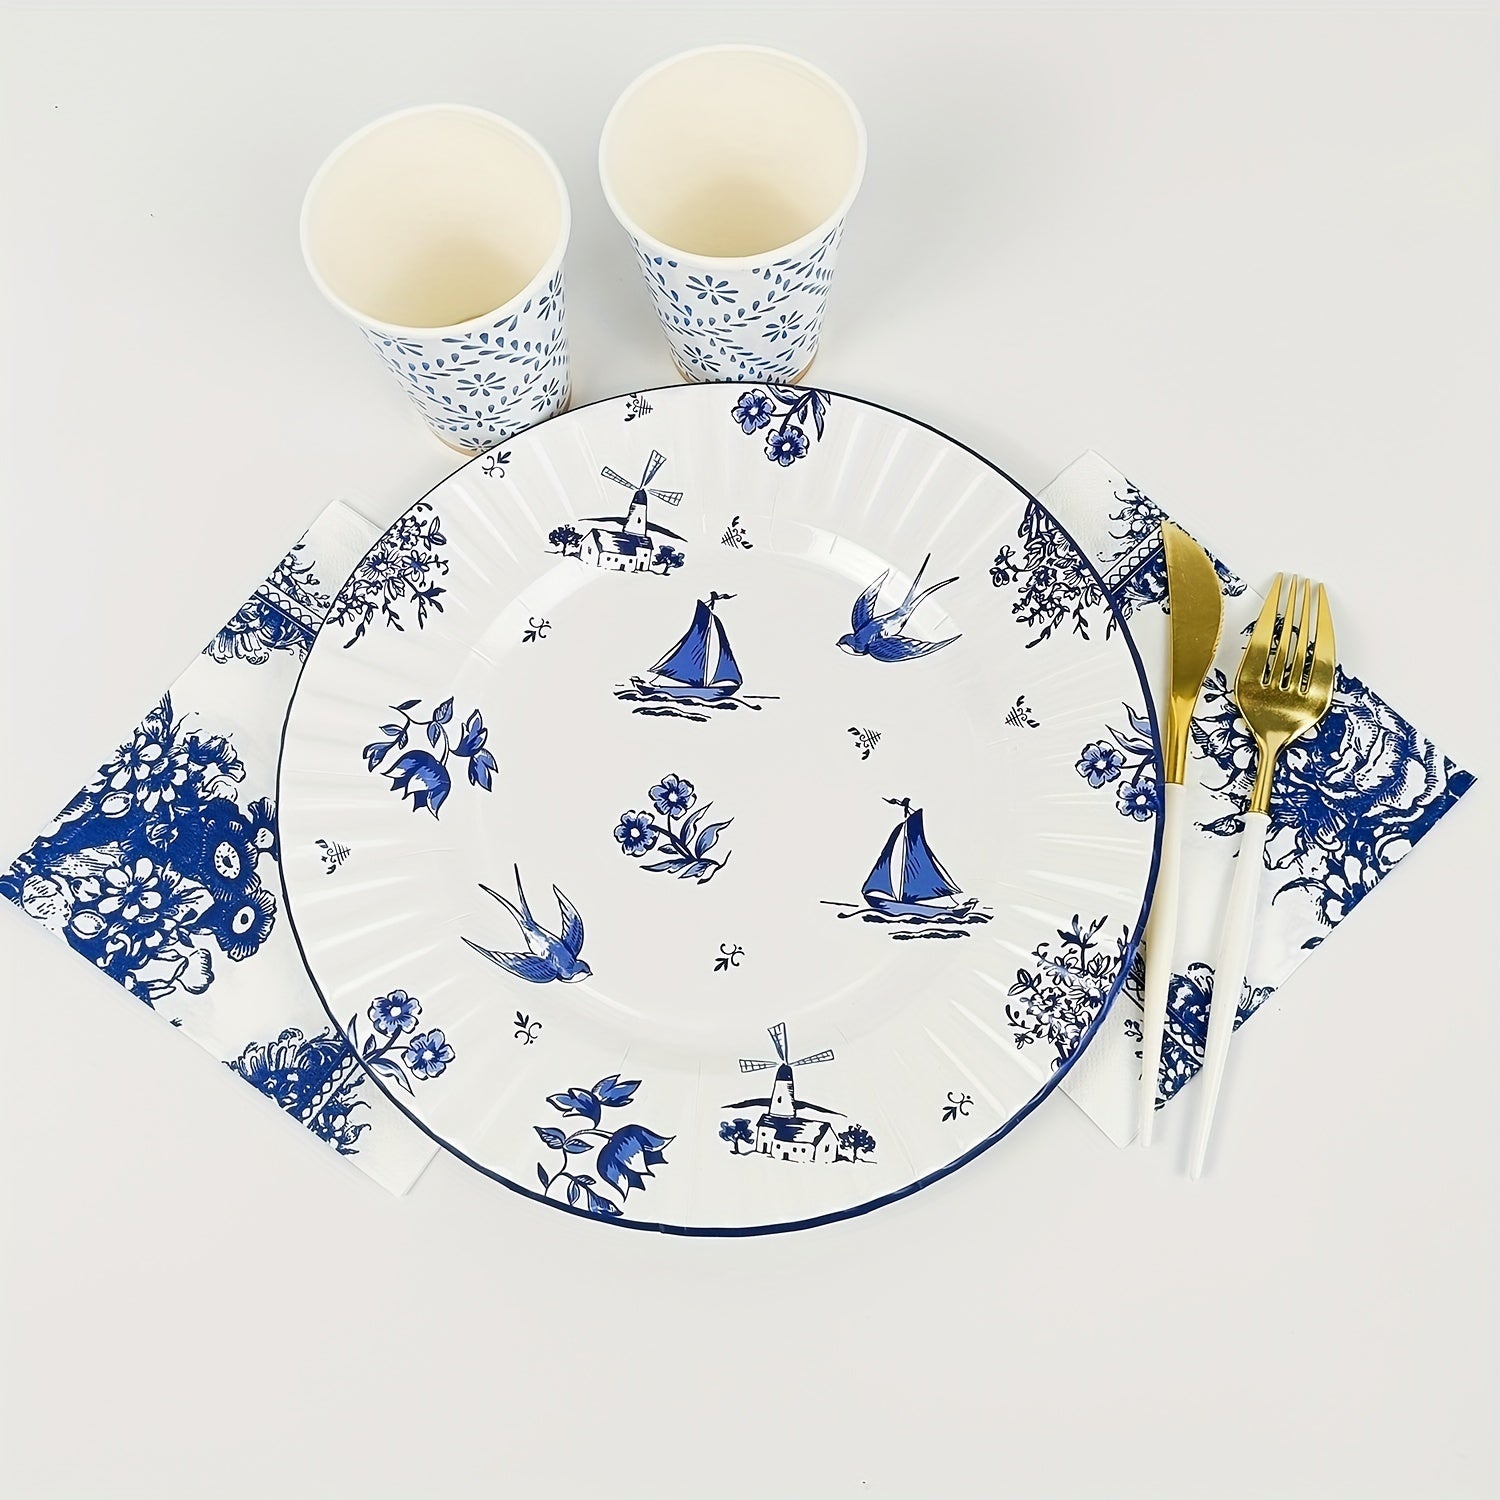 Intricate pattern design on beautiful porcelain plates